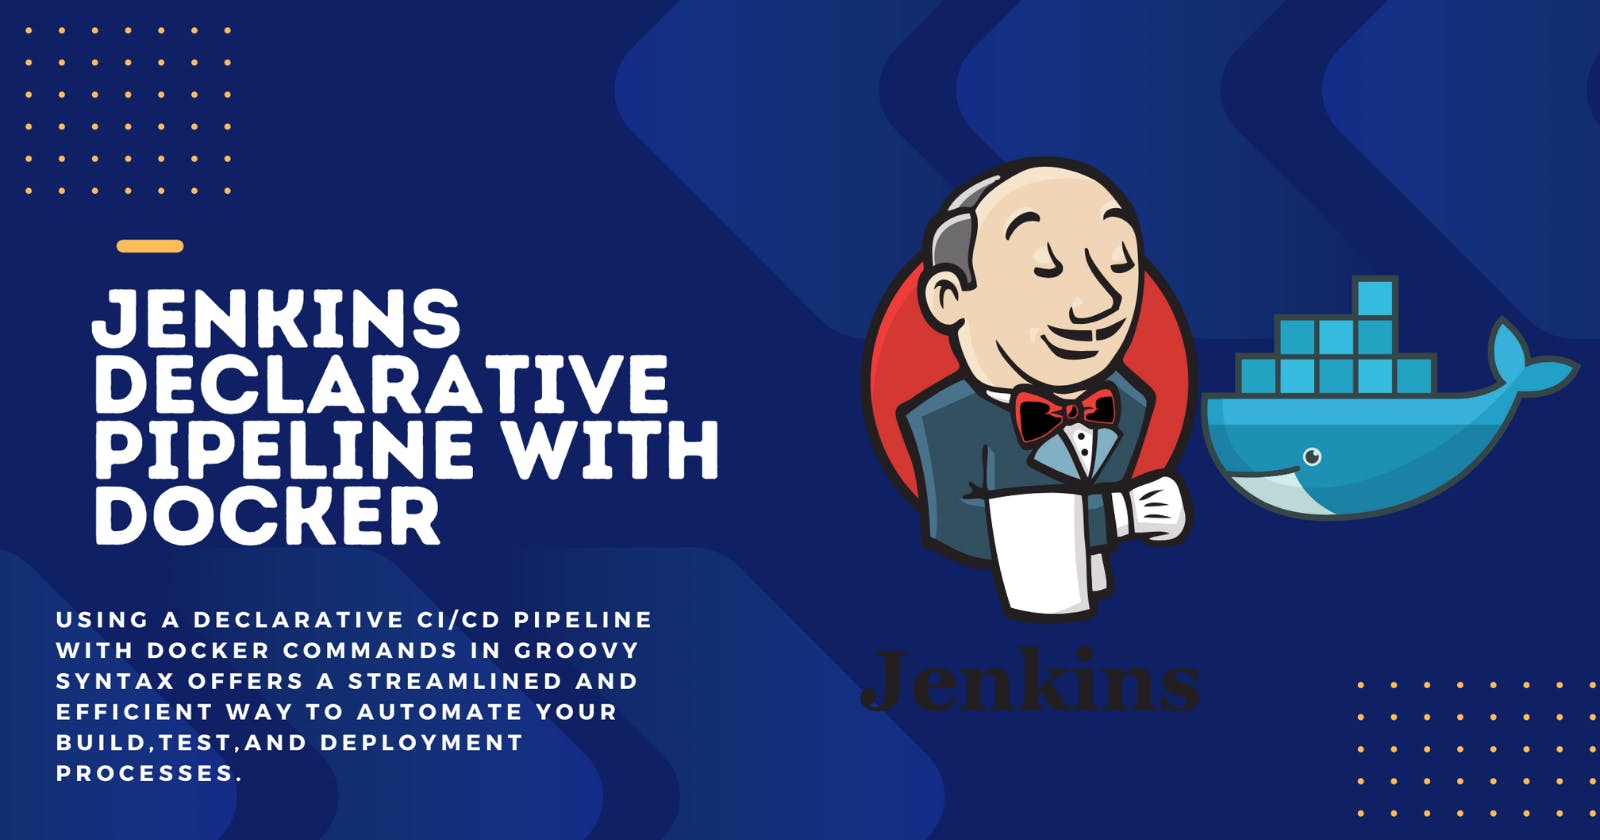 🧬Day 27 - Jenkins Declarative Pipeline with Docker